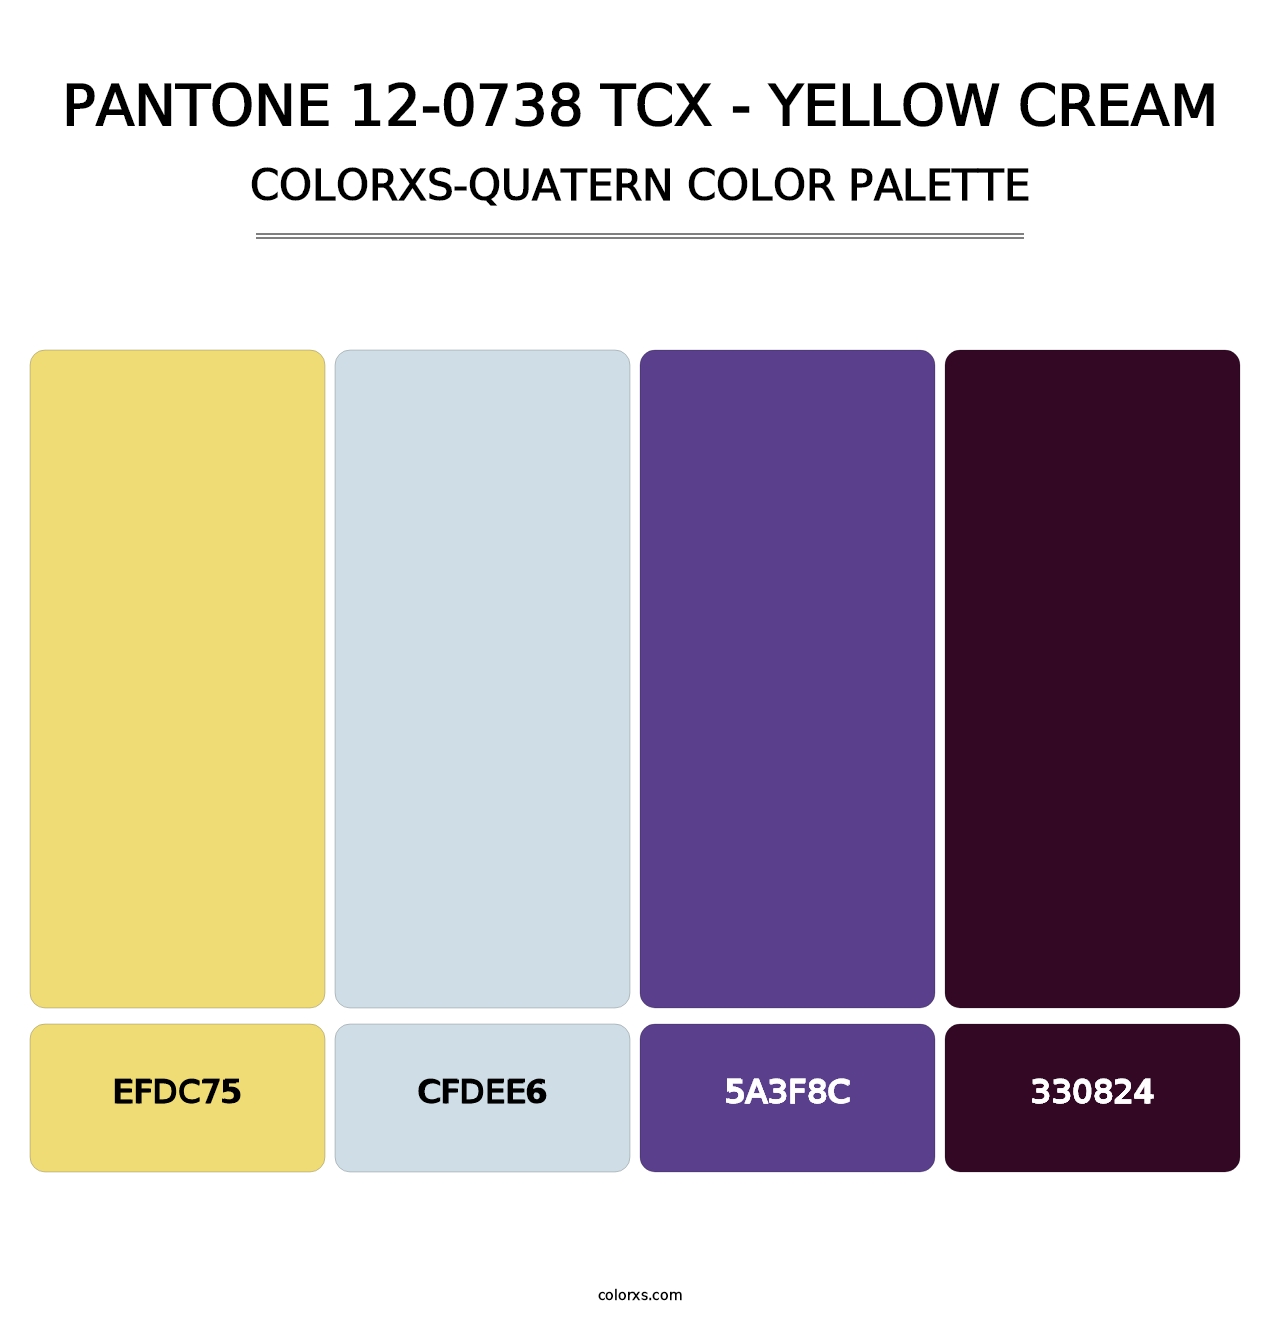 PANTONE 12-0738 TCX - Yellow Cream - Colorxs Quatern Palette